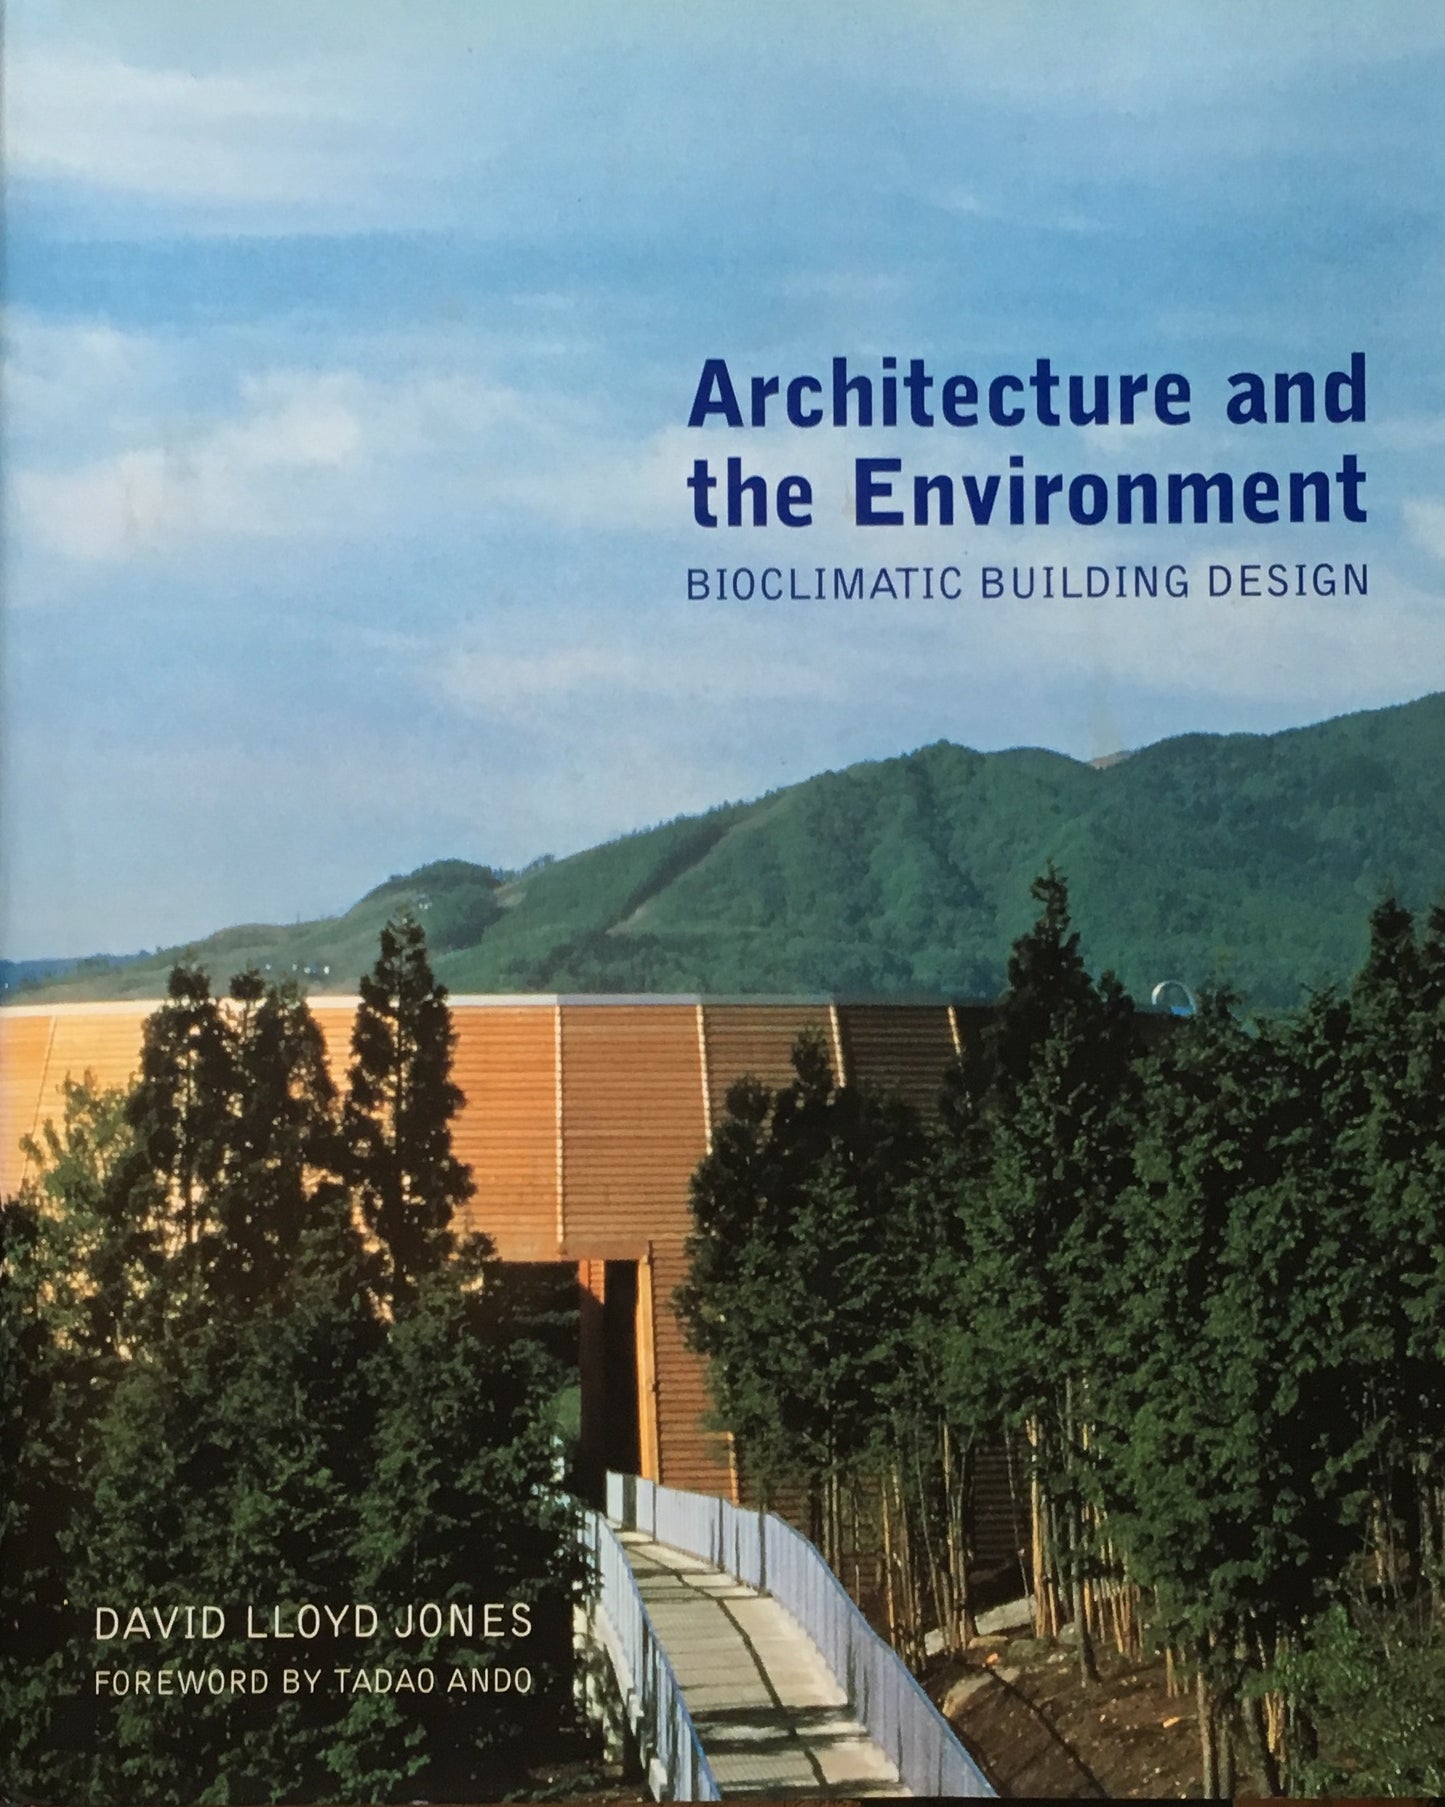 Aechitecture and the Environment　BIOCLIMATIC BUILDING DESIGN　David Lloyd Jones